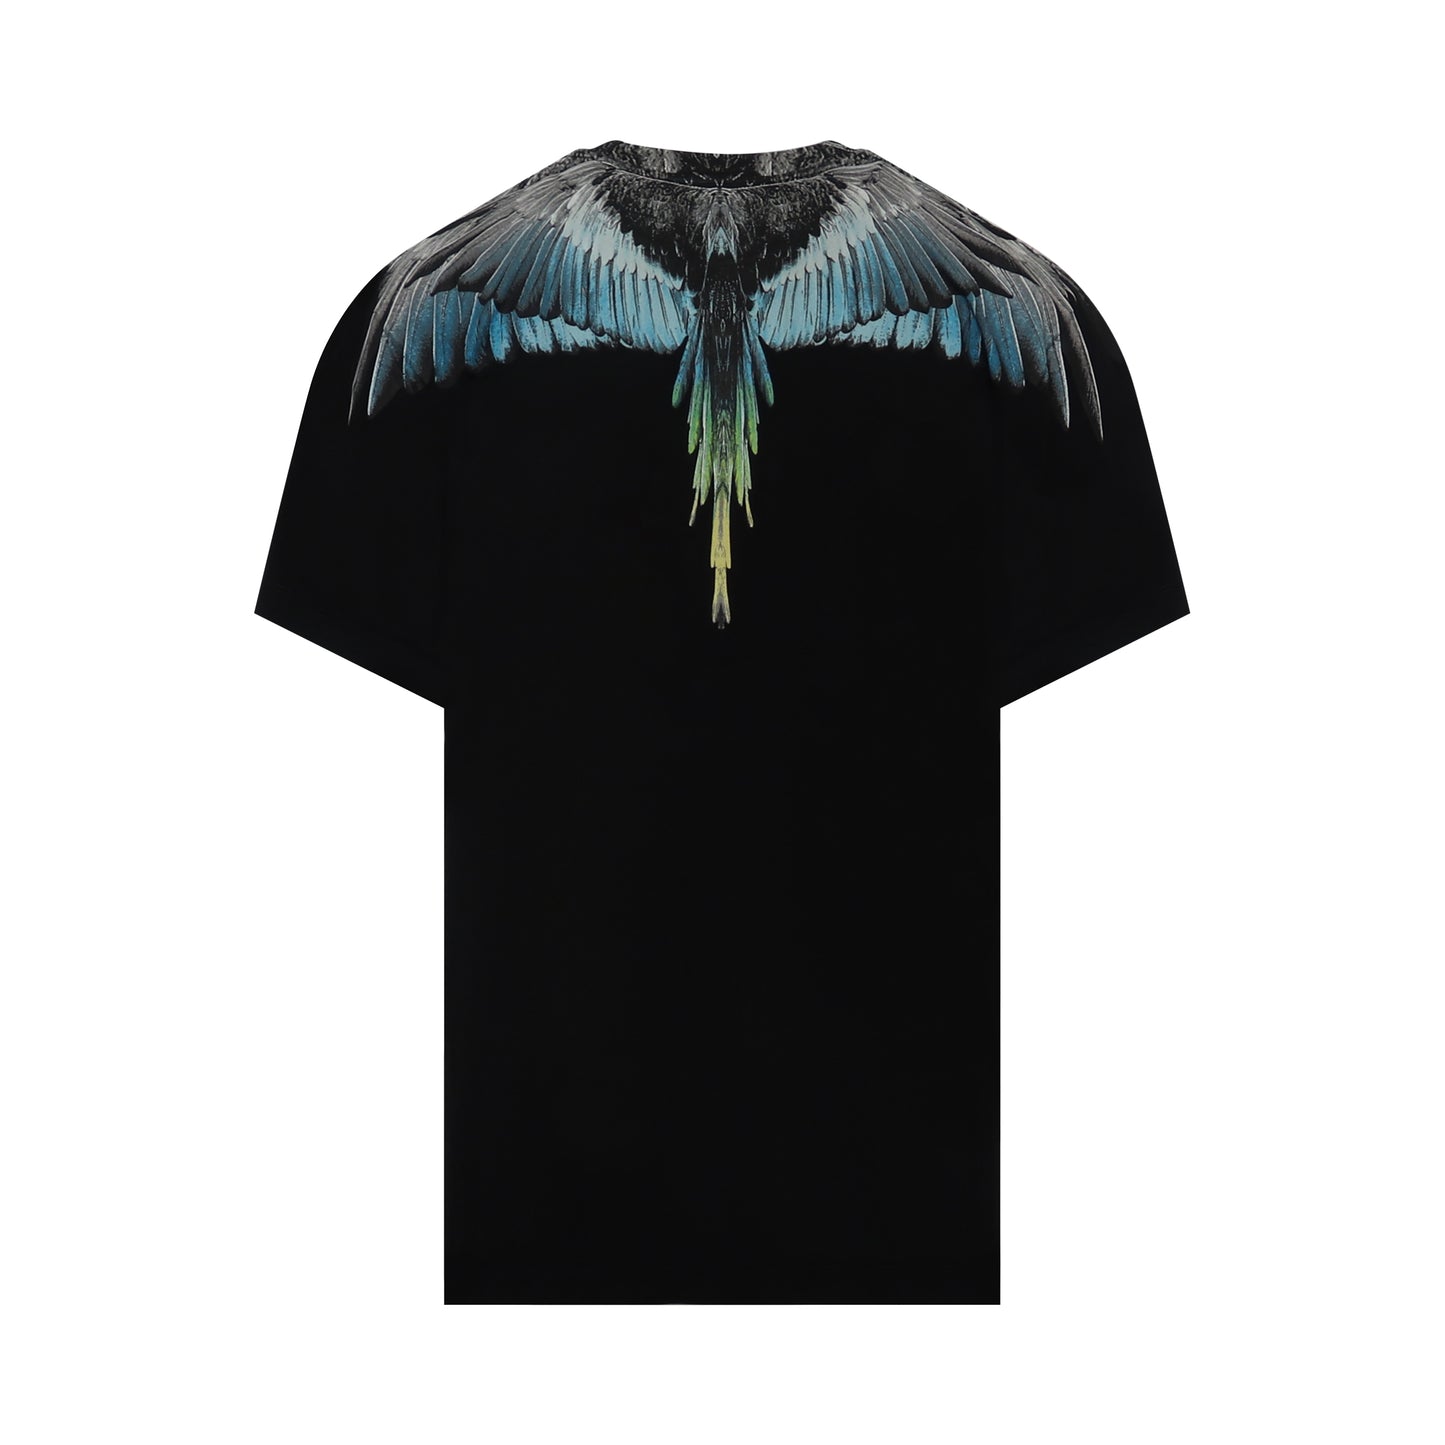 Classic Wings Print T-Shirt in Black/Blue